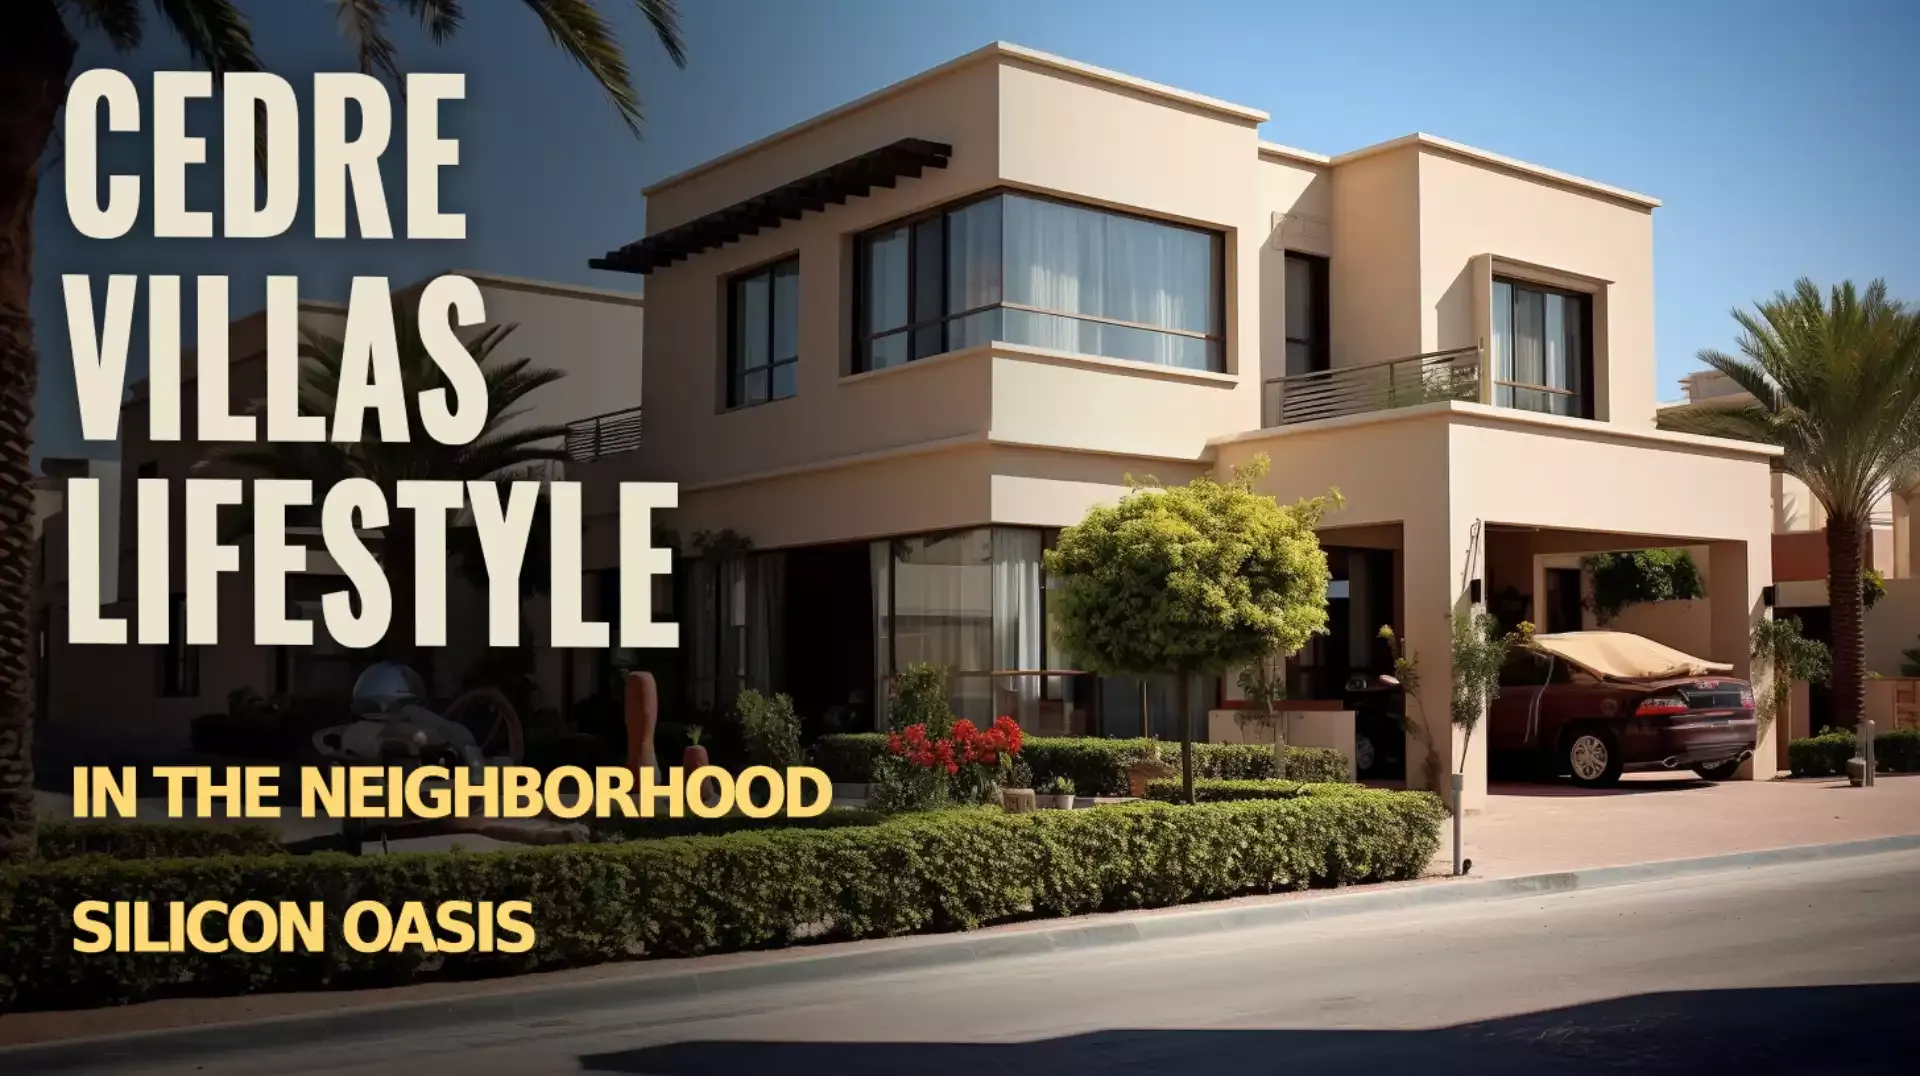 Luxury Living: Cedre Villas in Silicon Oasis